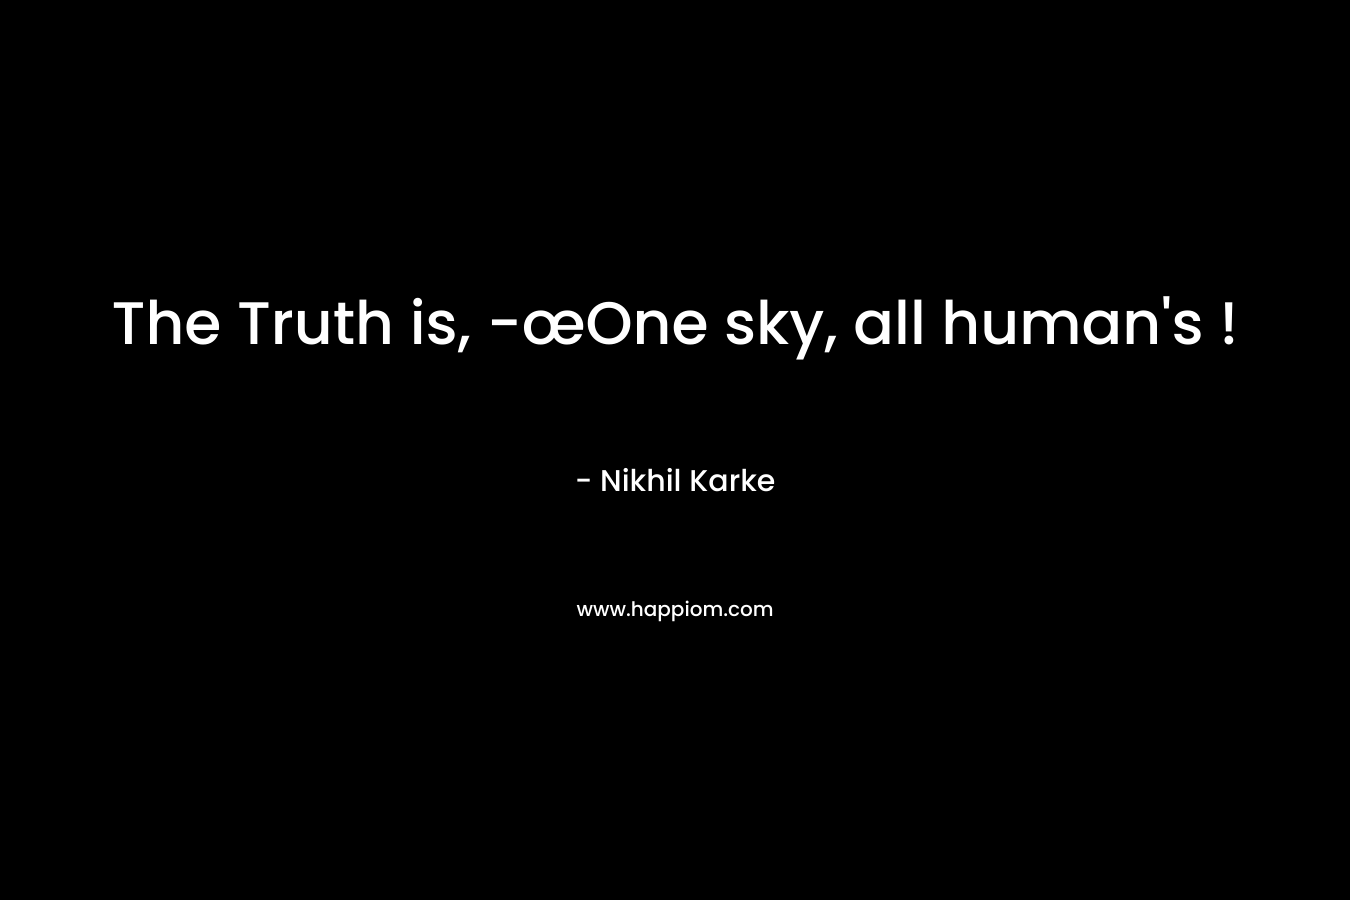 The Truth is, -œOne sky, all human's !